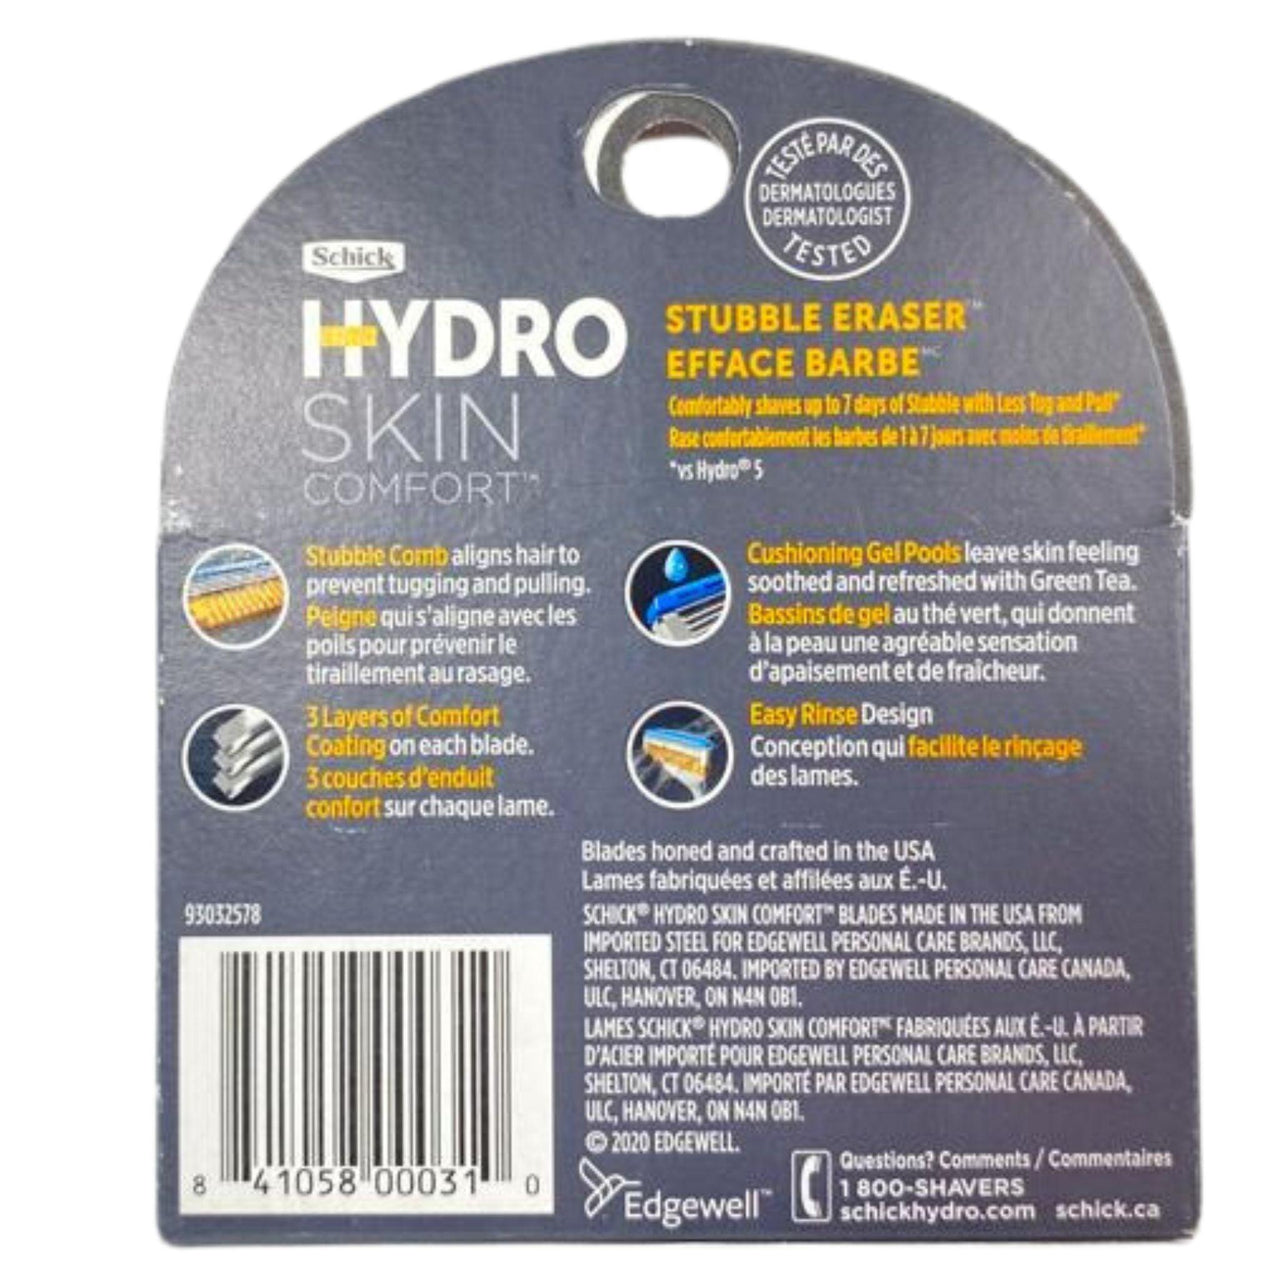 Schick Hydro Skin Comfort Stubble Eraser 4 Cartridges (50 Pcs Box) - Discount Wholesalers Inc